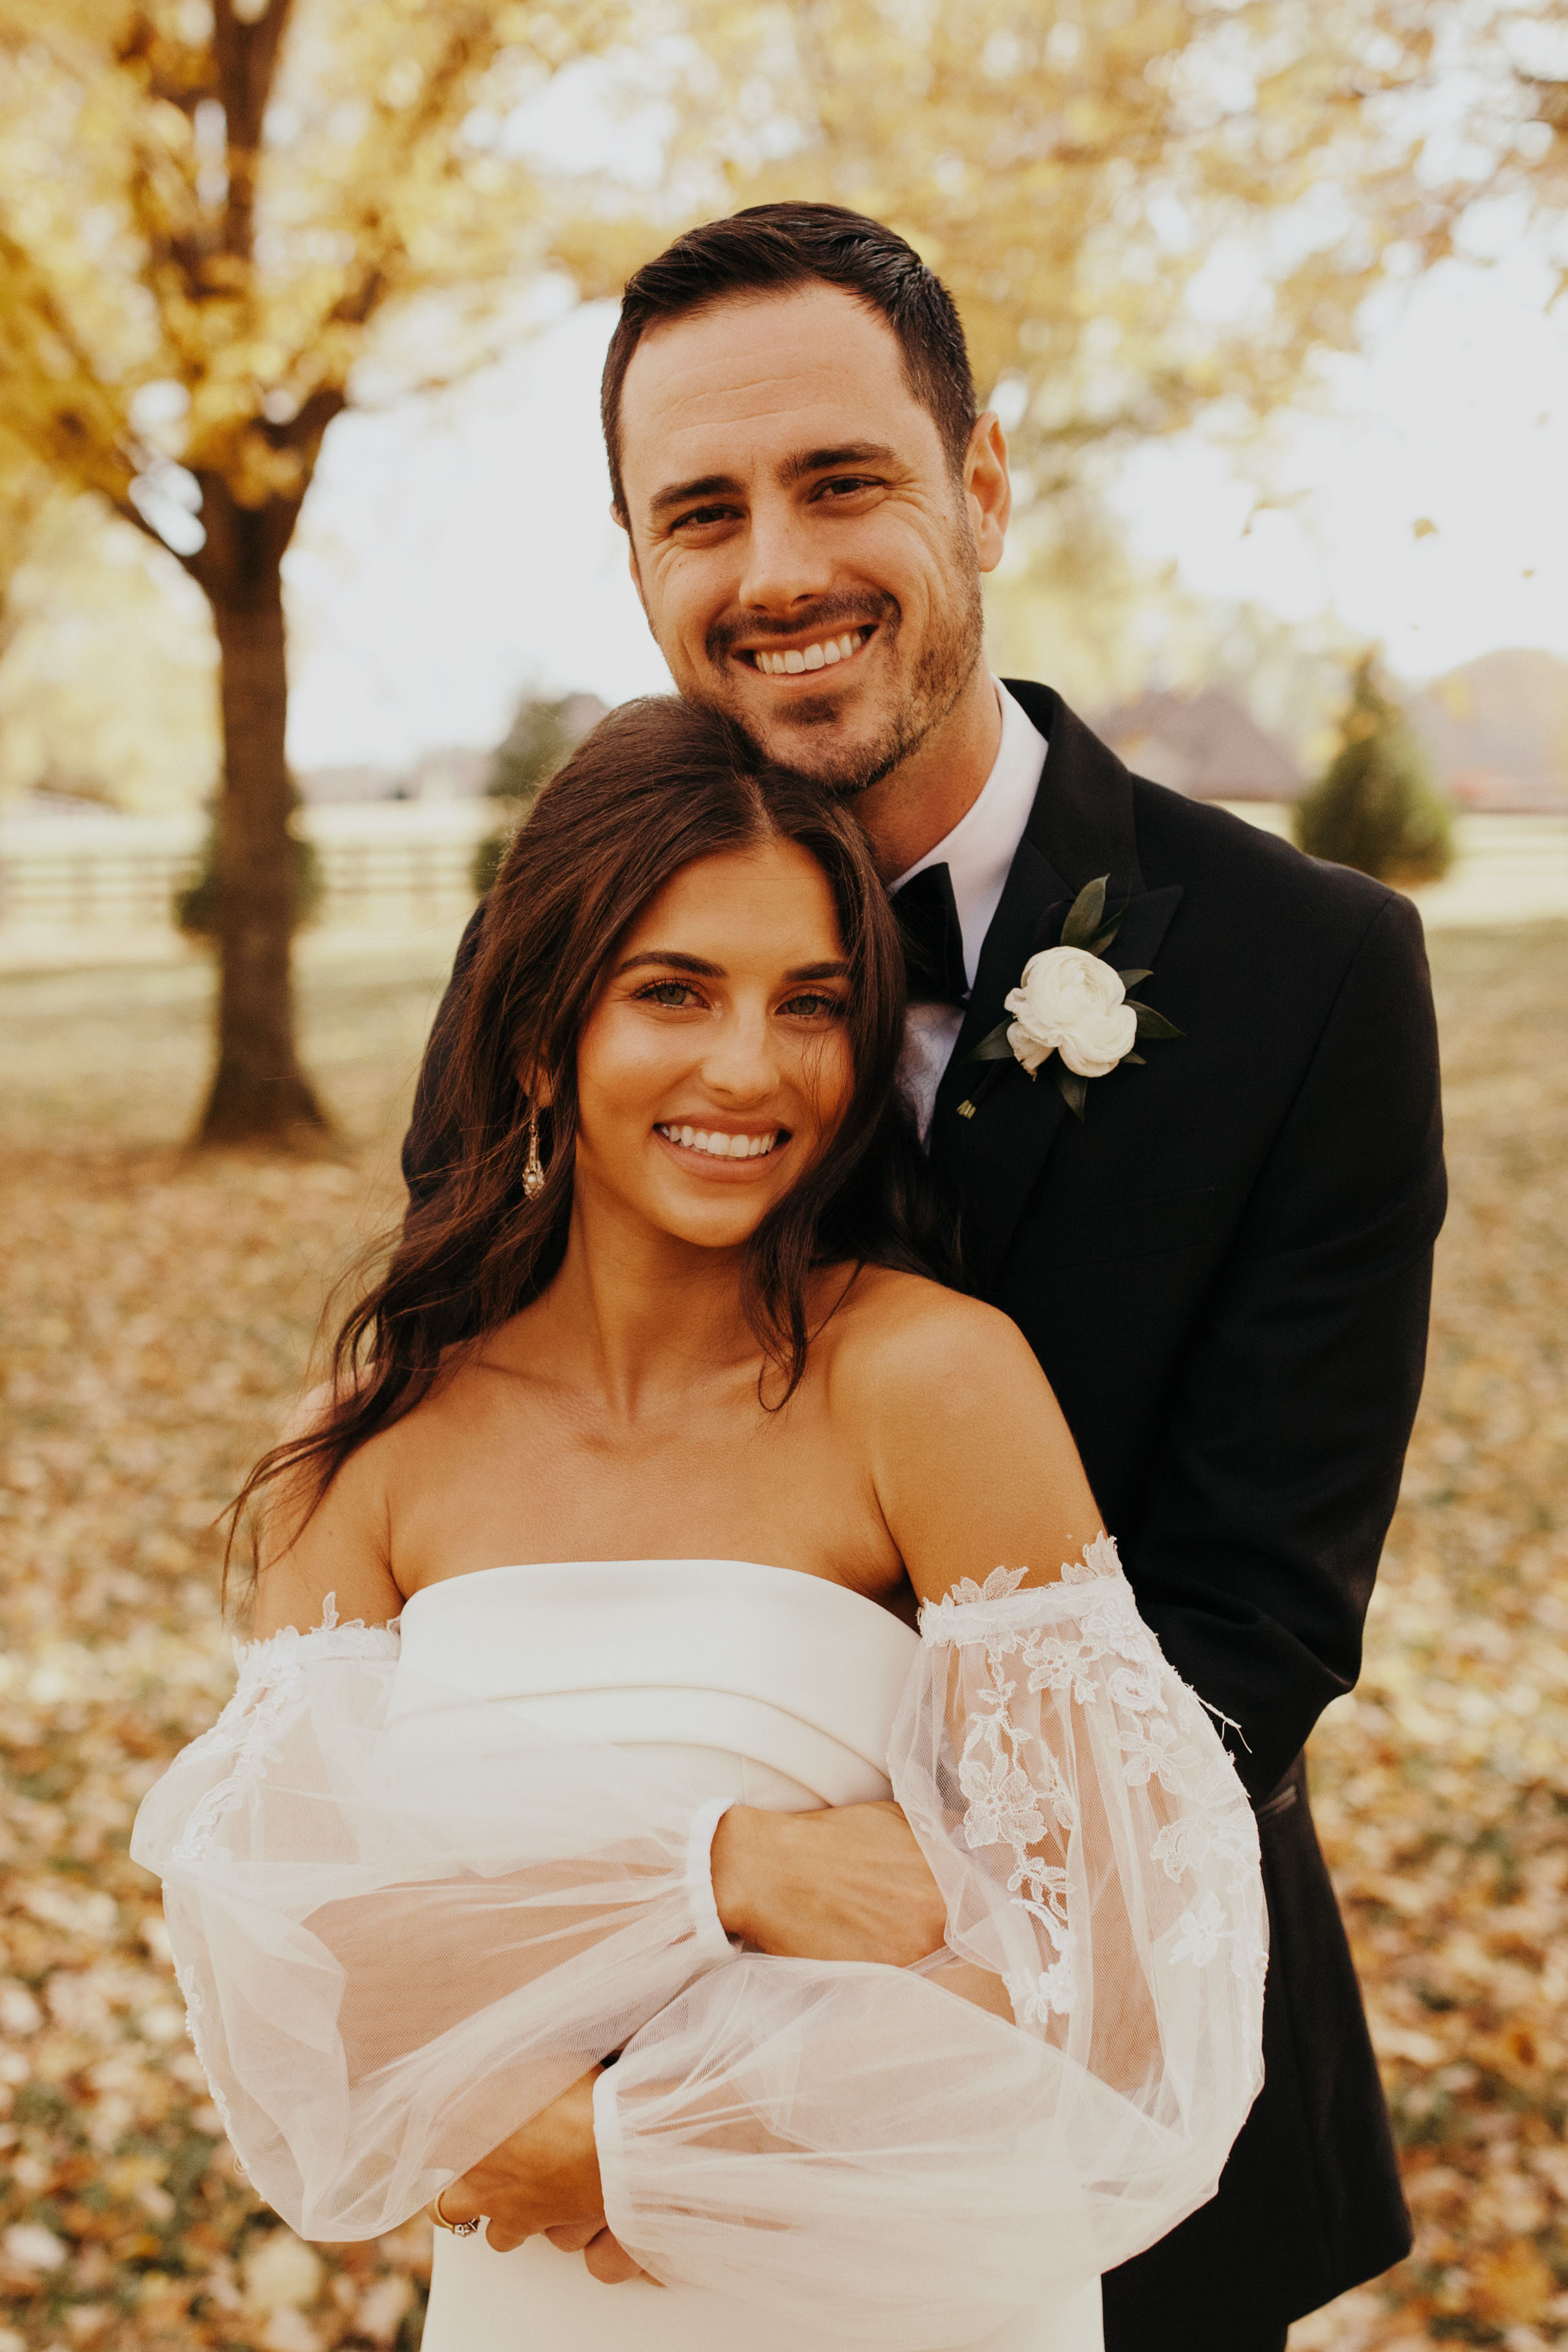 The Bachelor’s Ben Higgins + Jessica Clarke’s Stunning Nashville Wedding